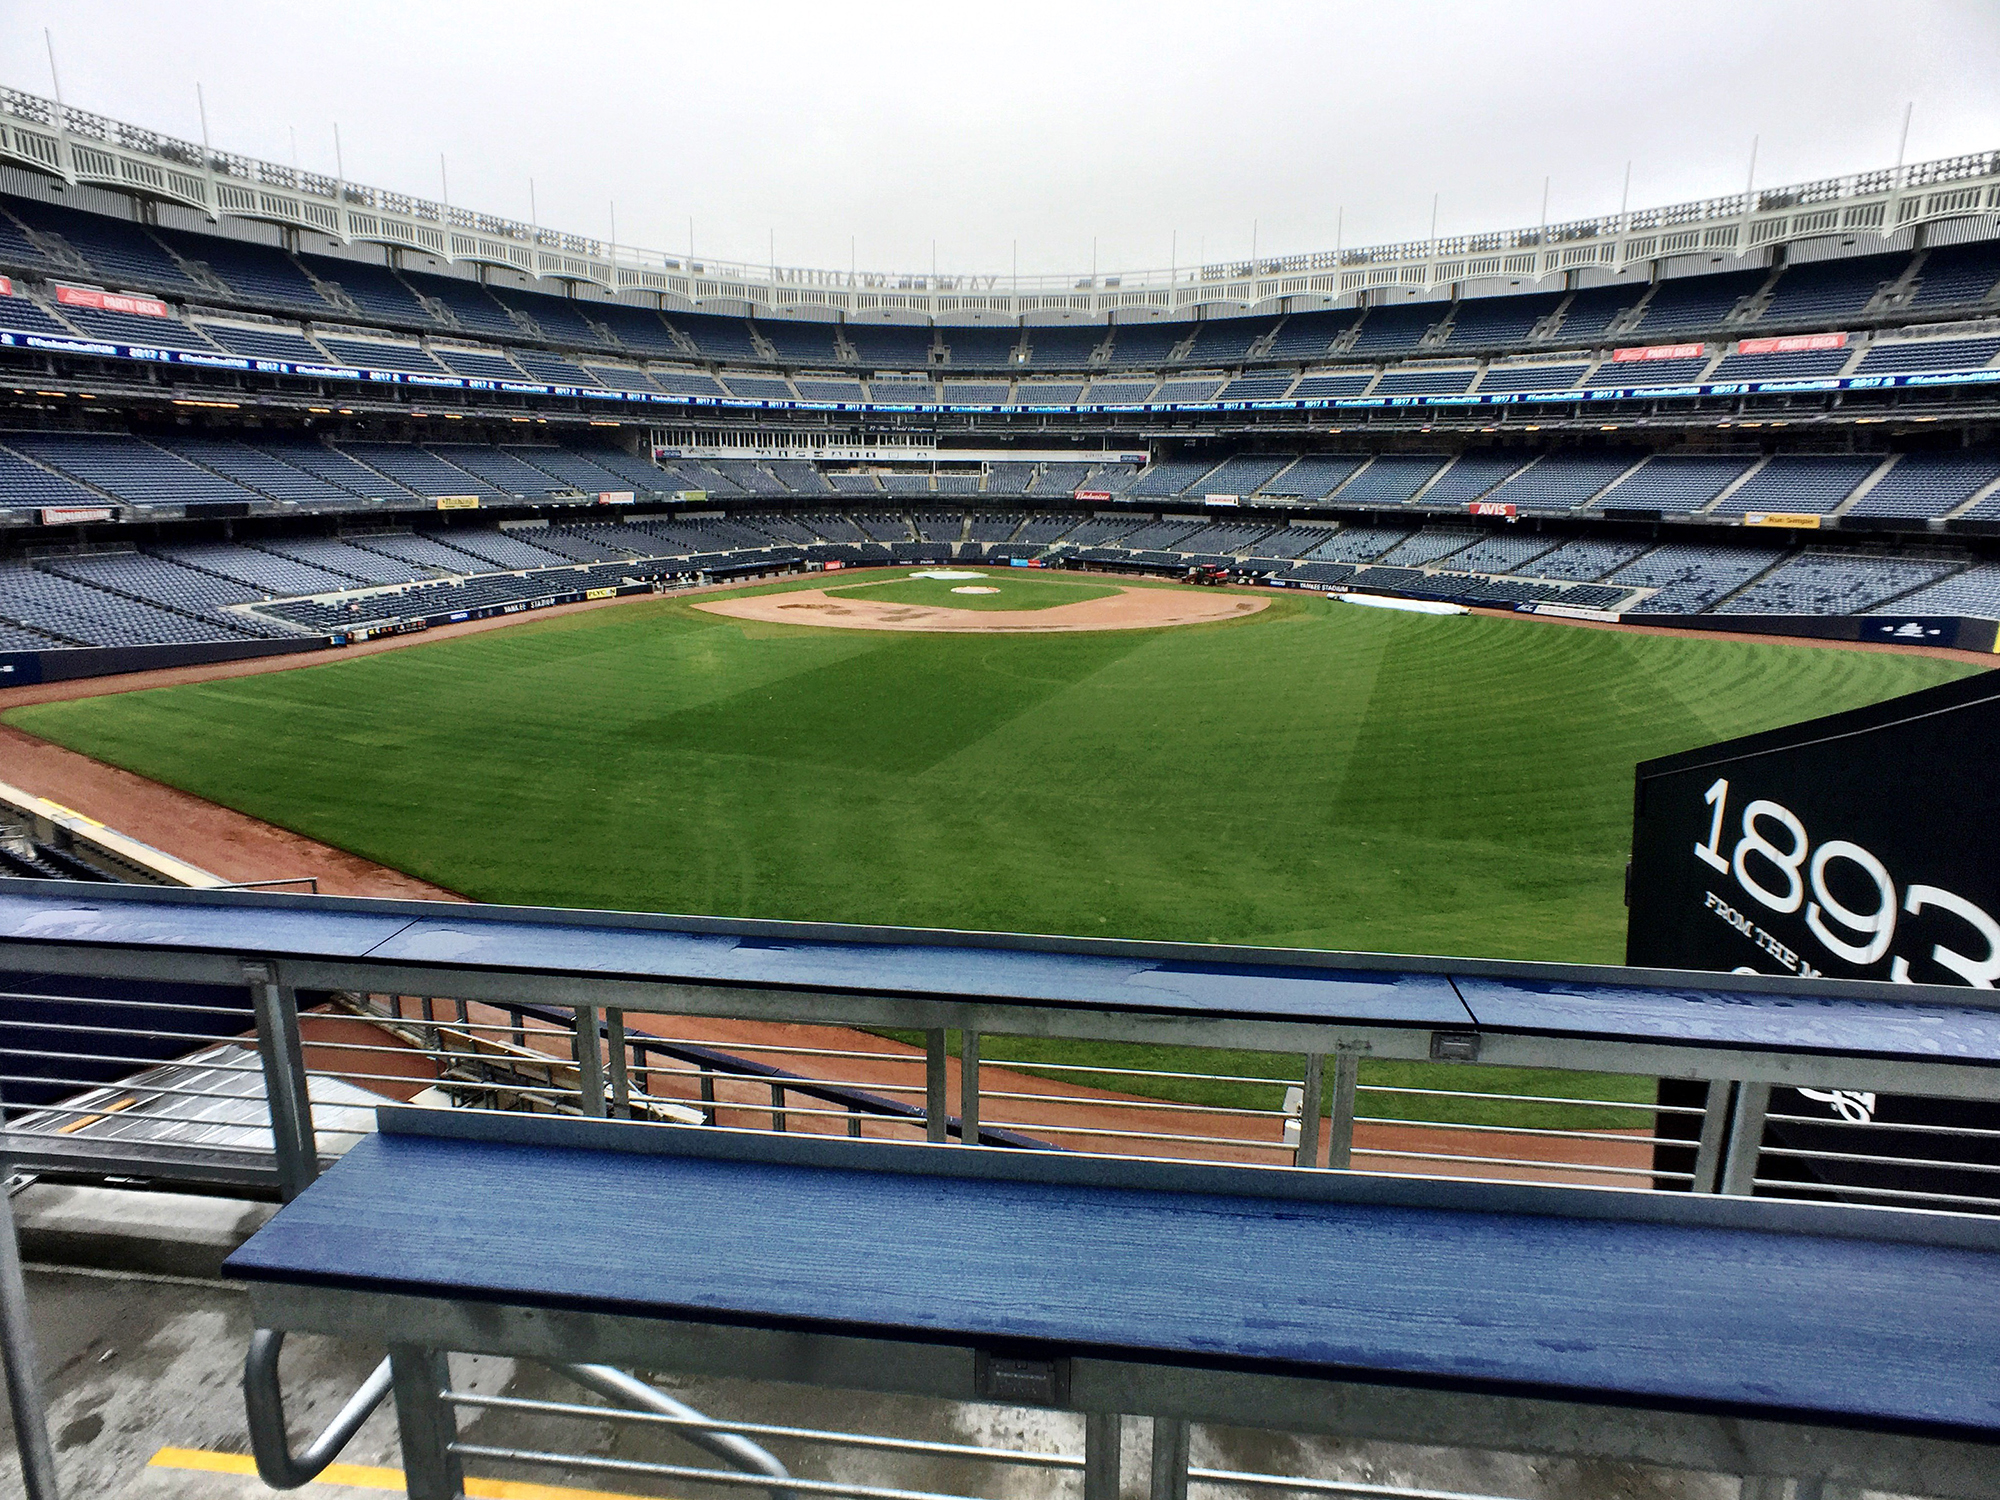 Behind the scenes at Yankee Stadium